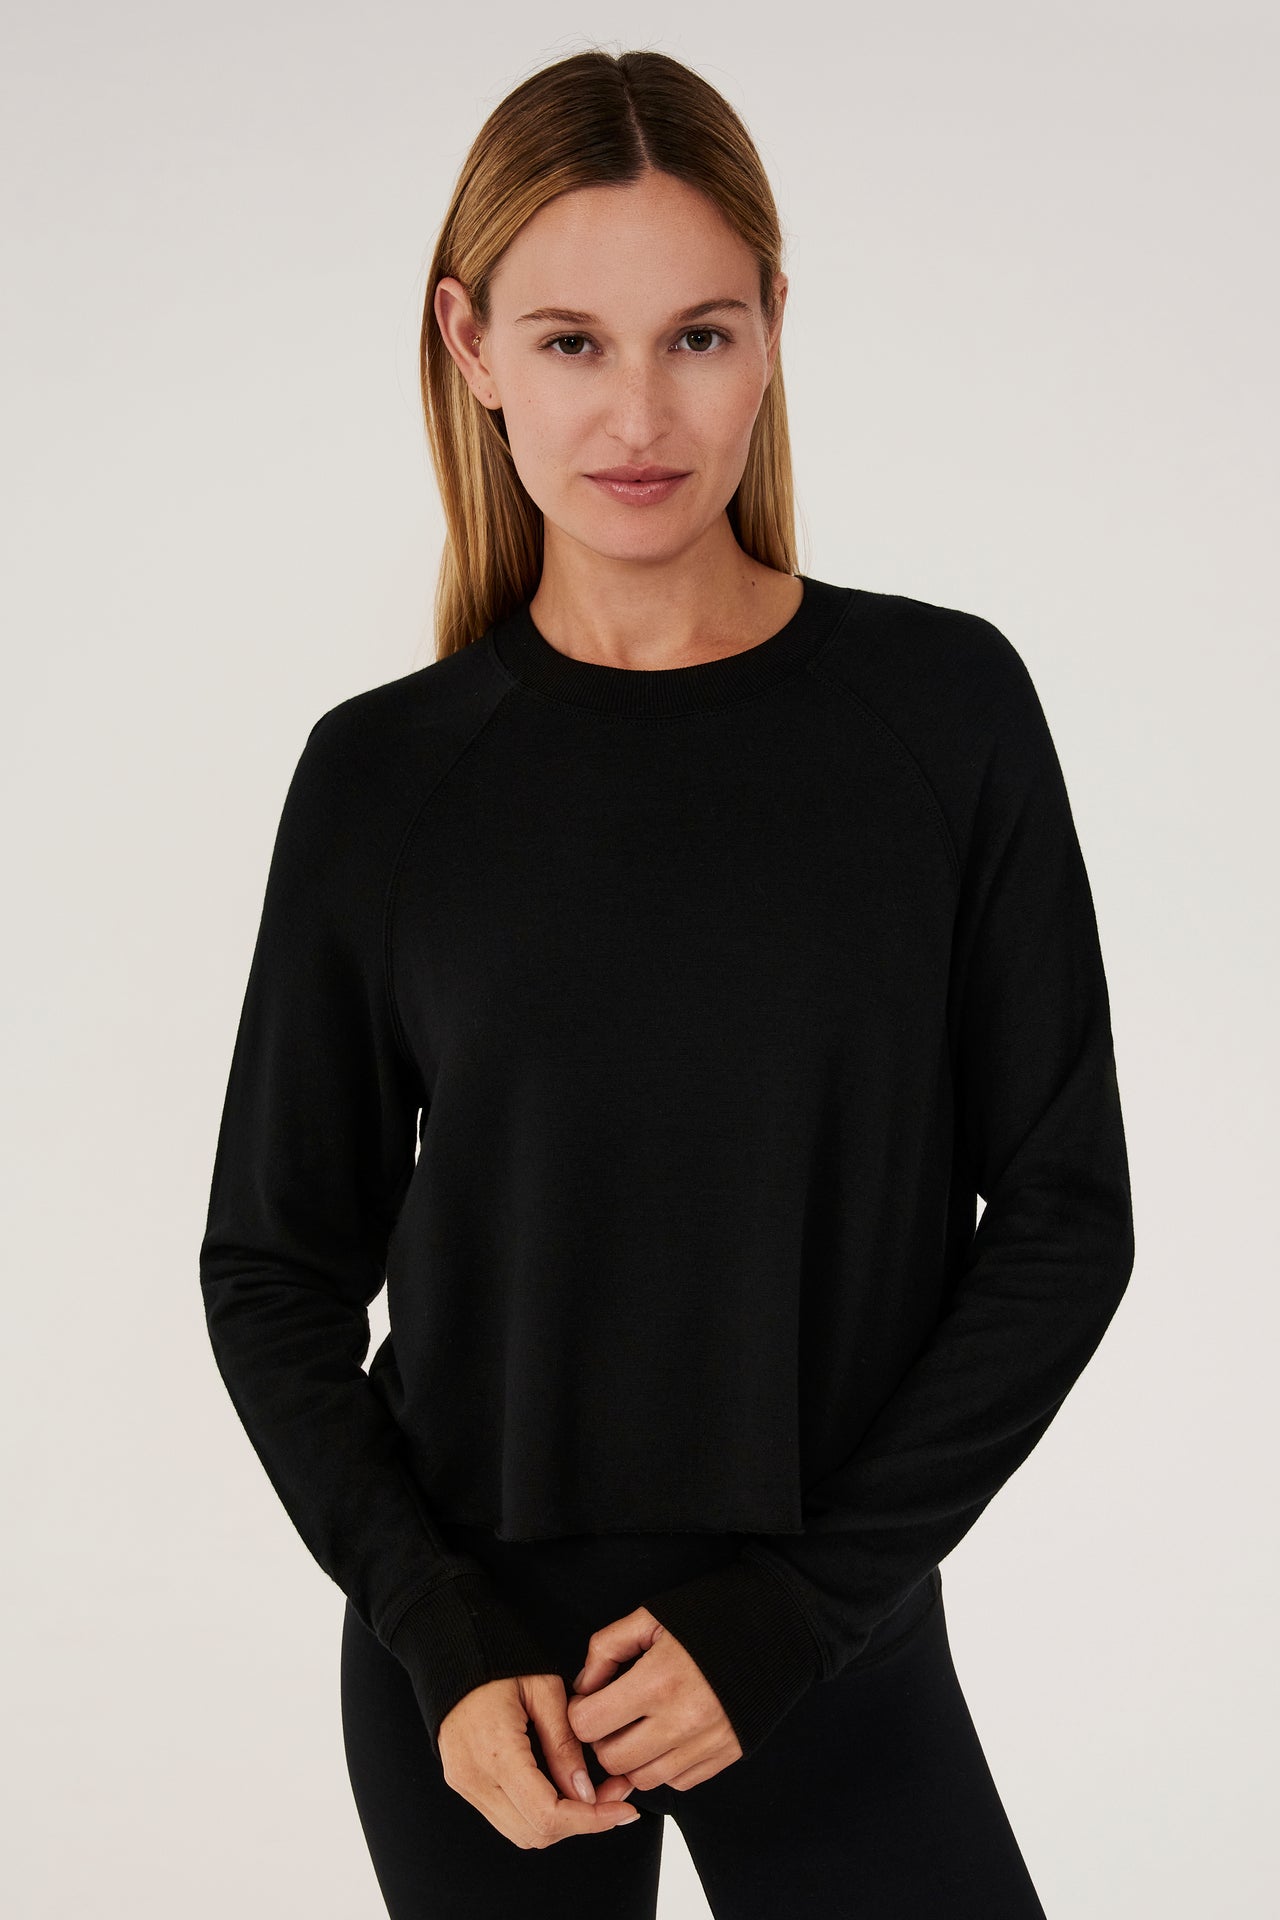 Front view of woman with dark blonde hair, wearing black cropped sweatshirt with black leggings